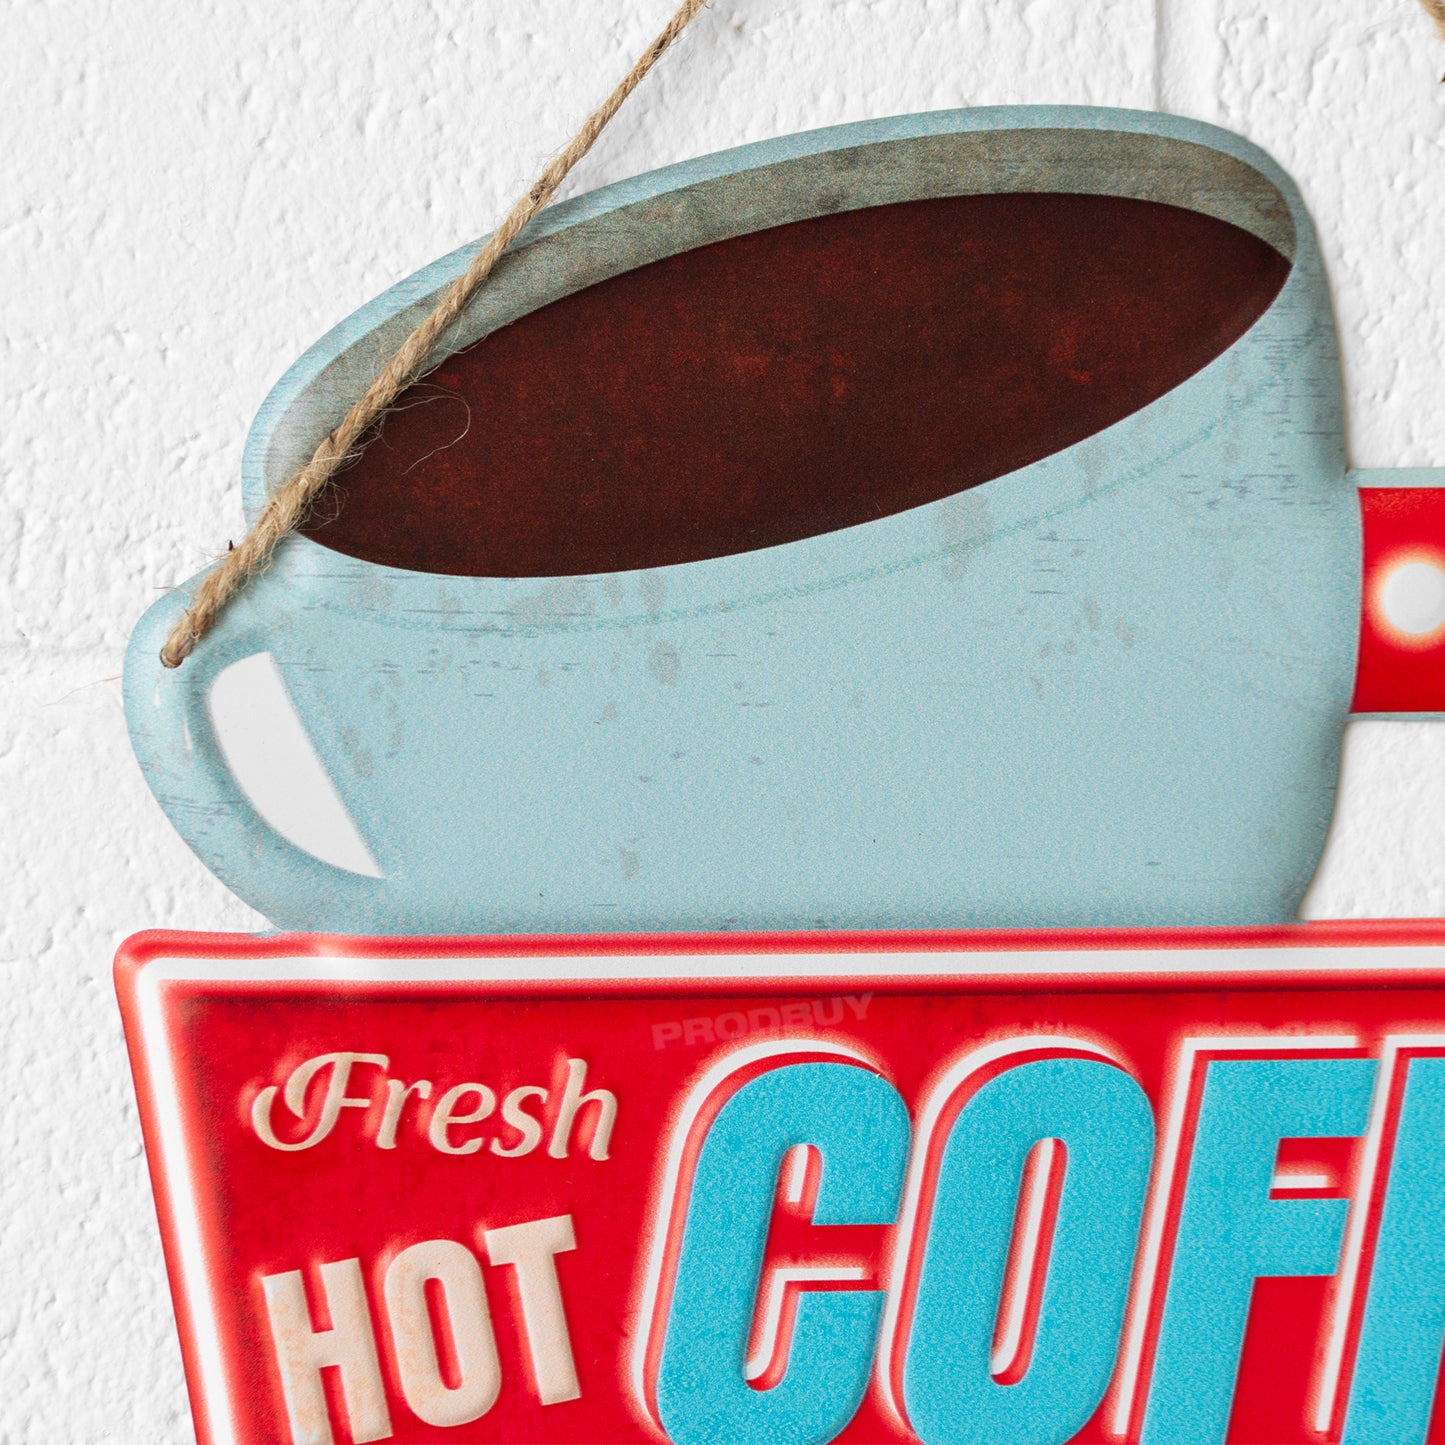 'Fresh Hot Coffee Shop' Large Metal Wall Sign